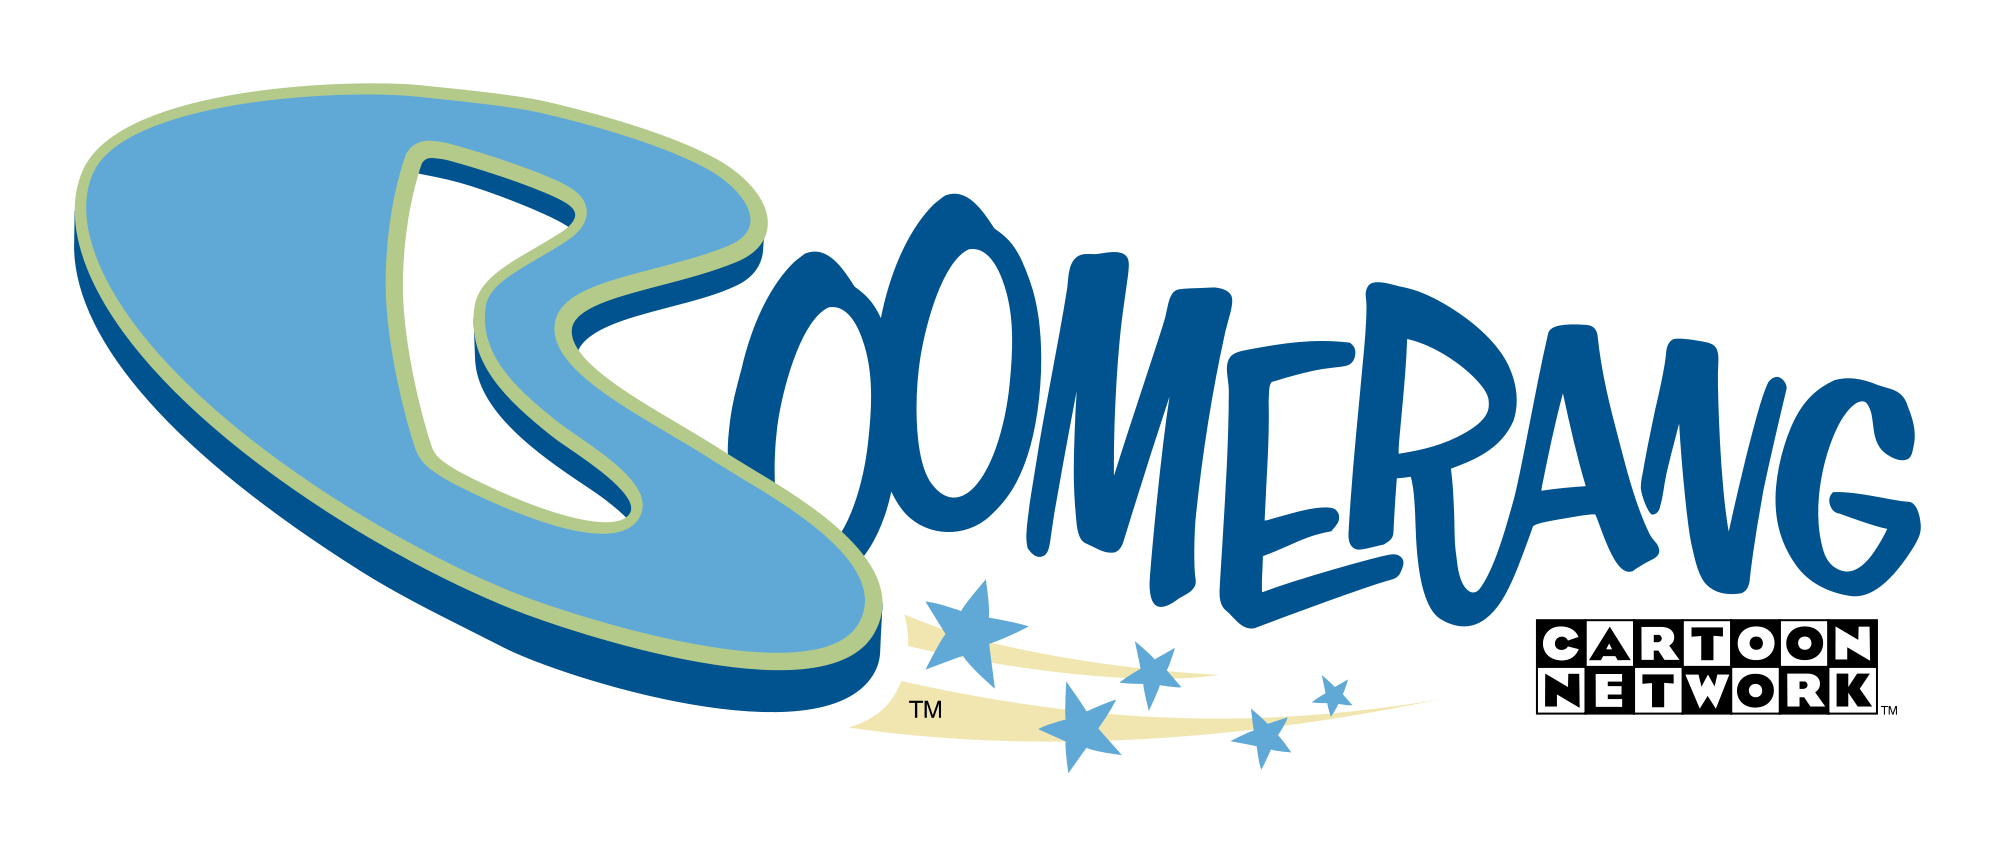 Australia Boomerang Logo - Image - Boomerang US logo.png | The CN Wiki | FANDOM powered by Wikia